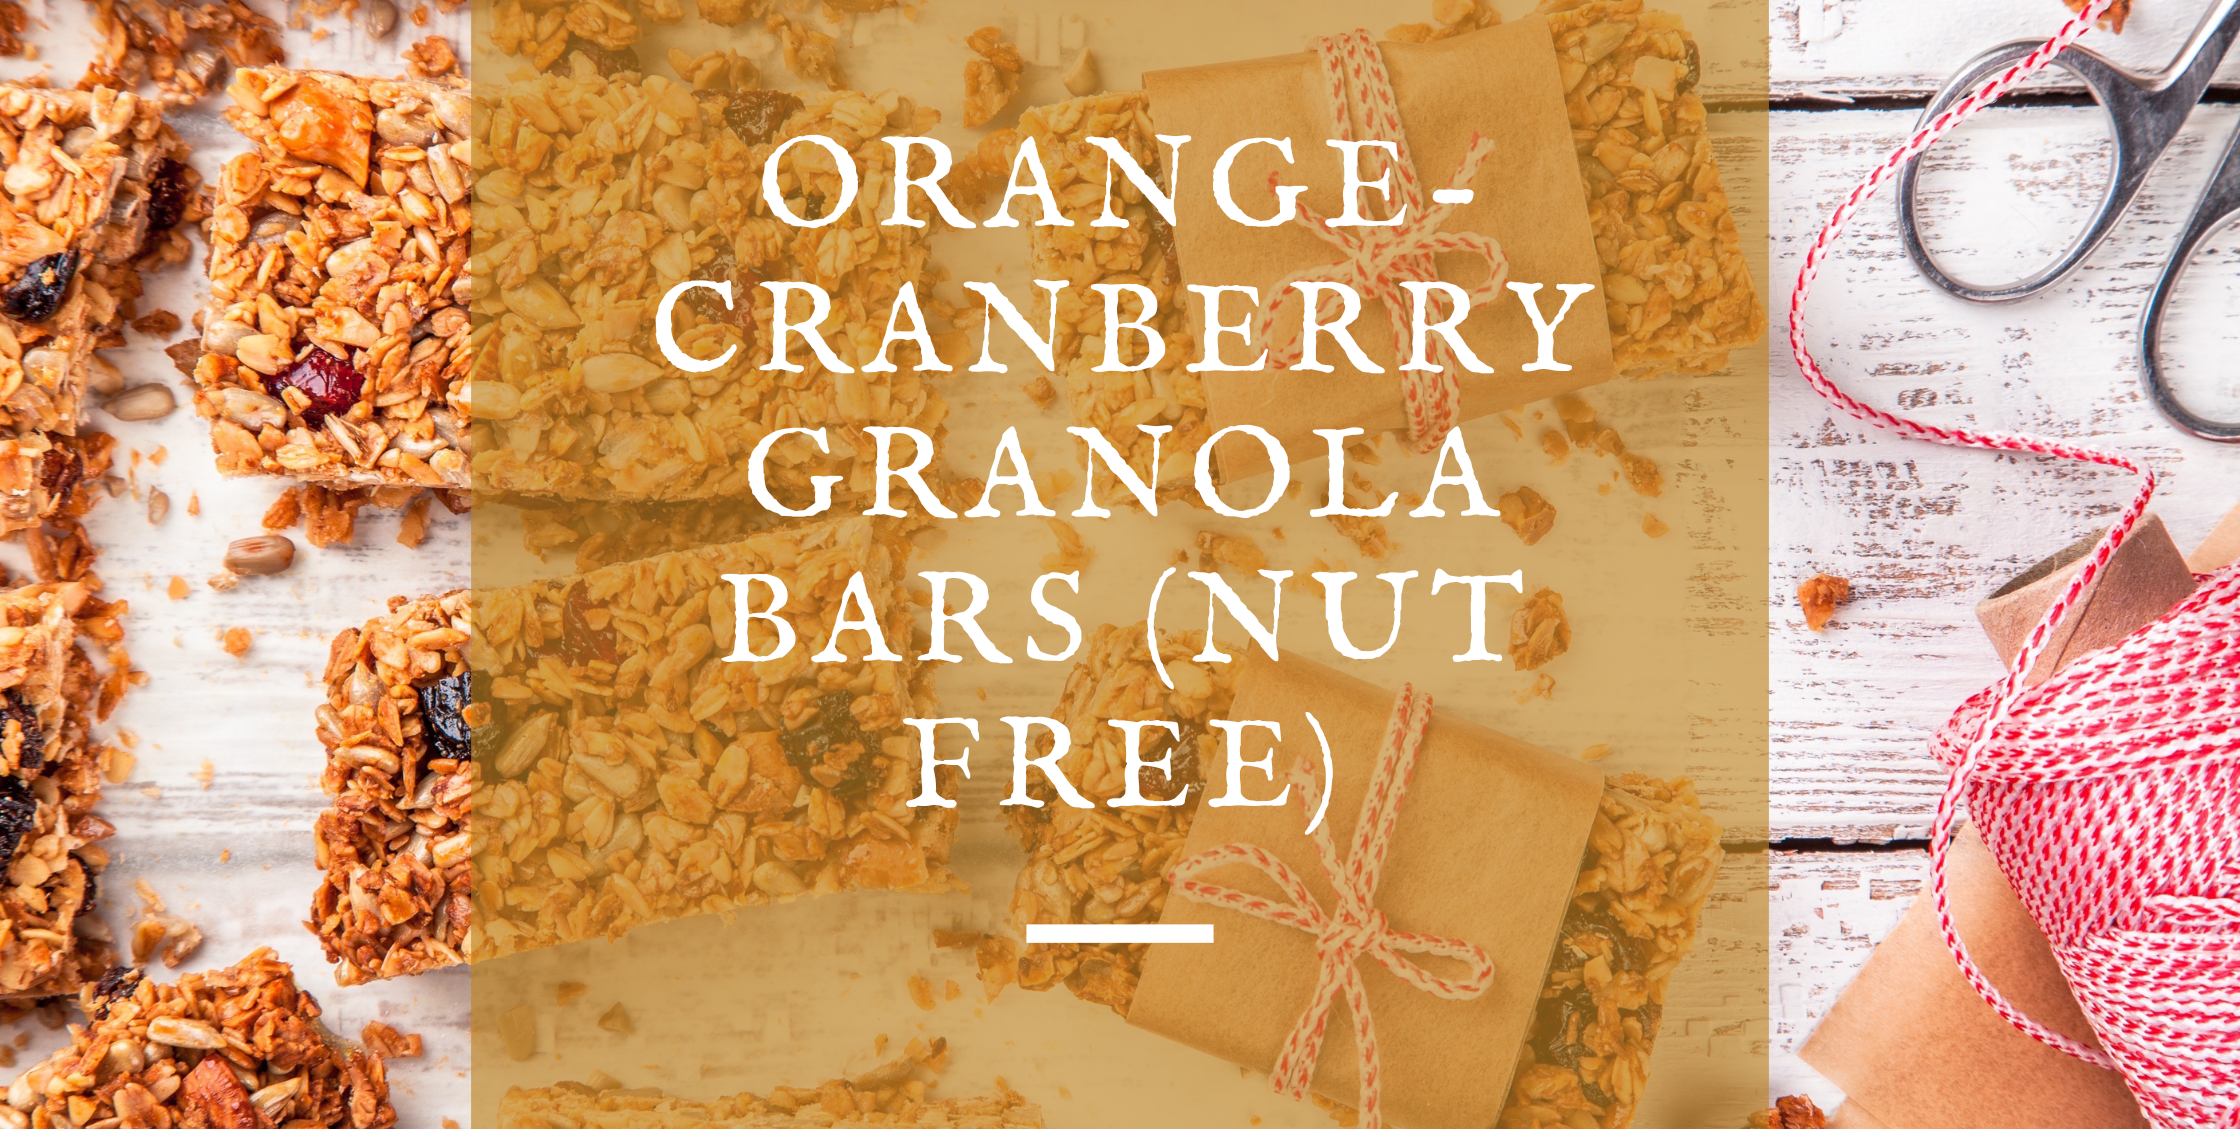 Orange-Cranberry Granola Bars (Nut Free)